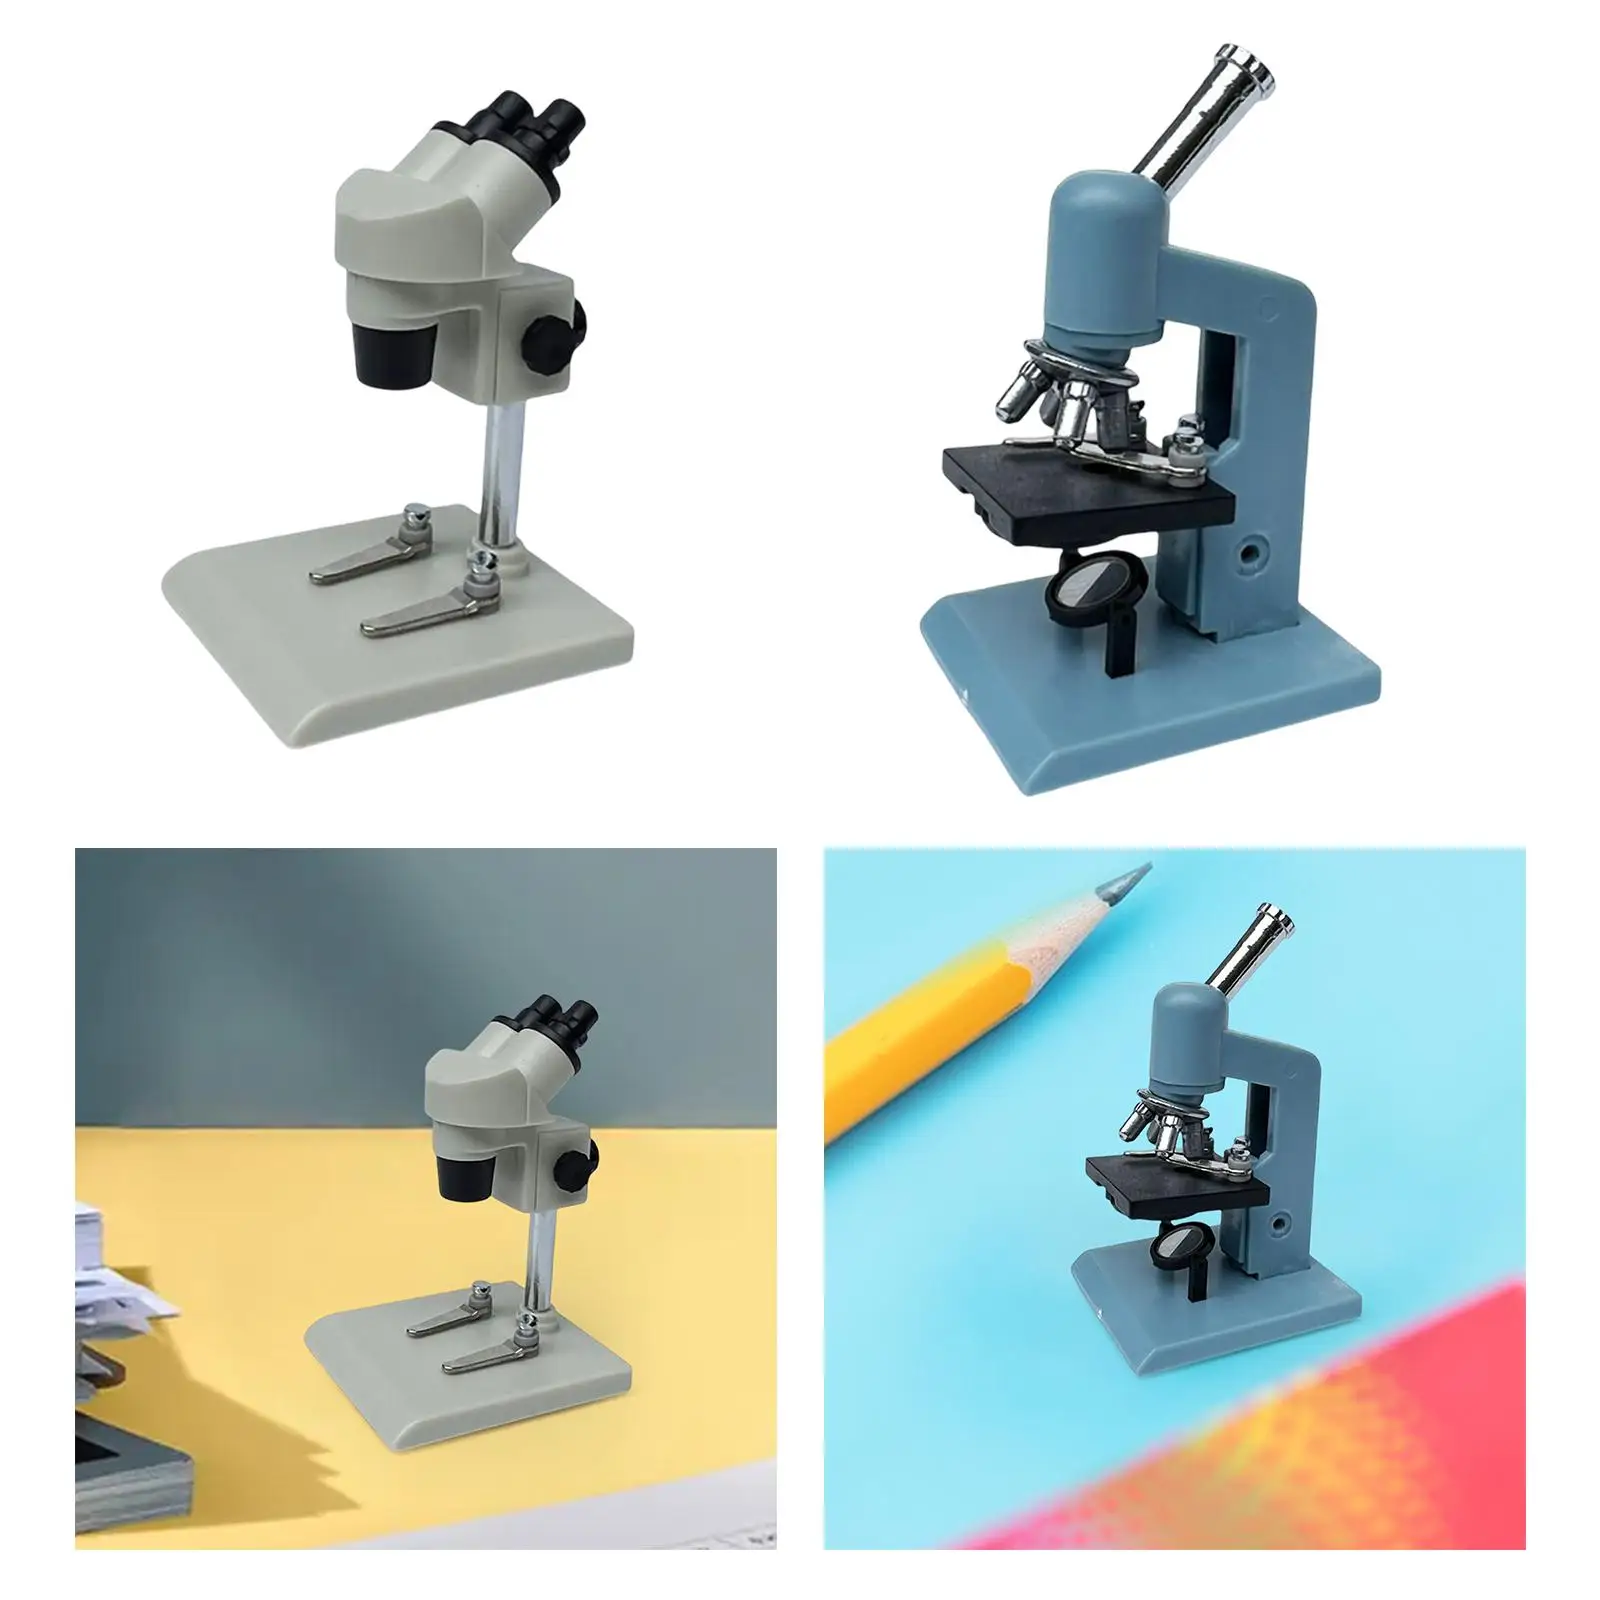 Miniature Laboratory Equipment Decorative Brand display for Decoration